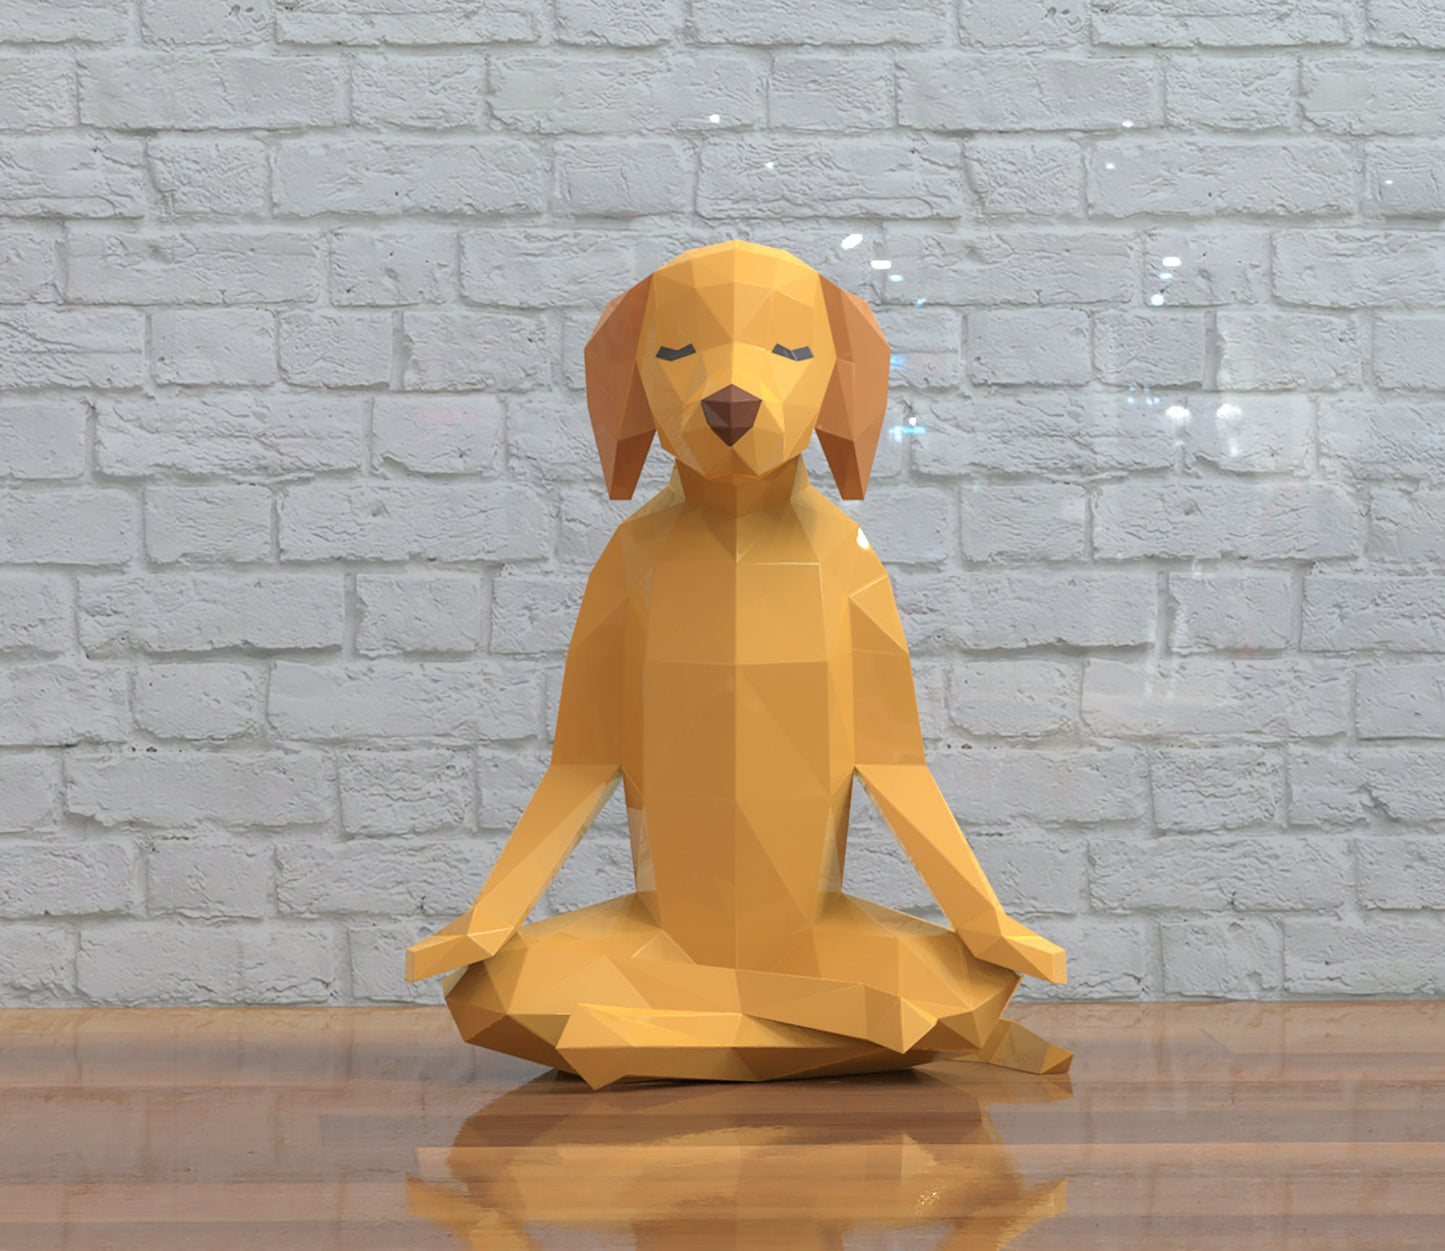 Dog Meditation